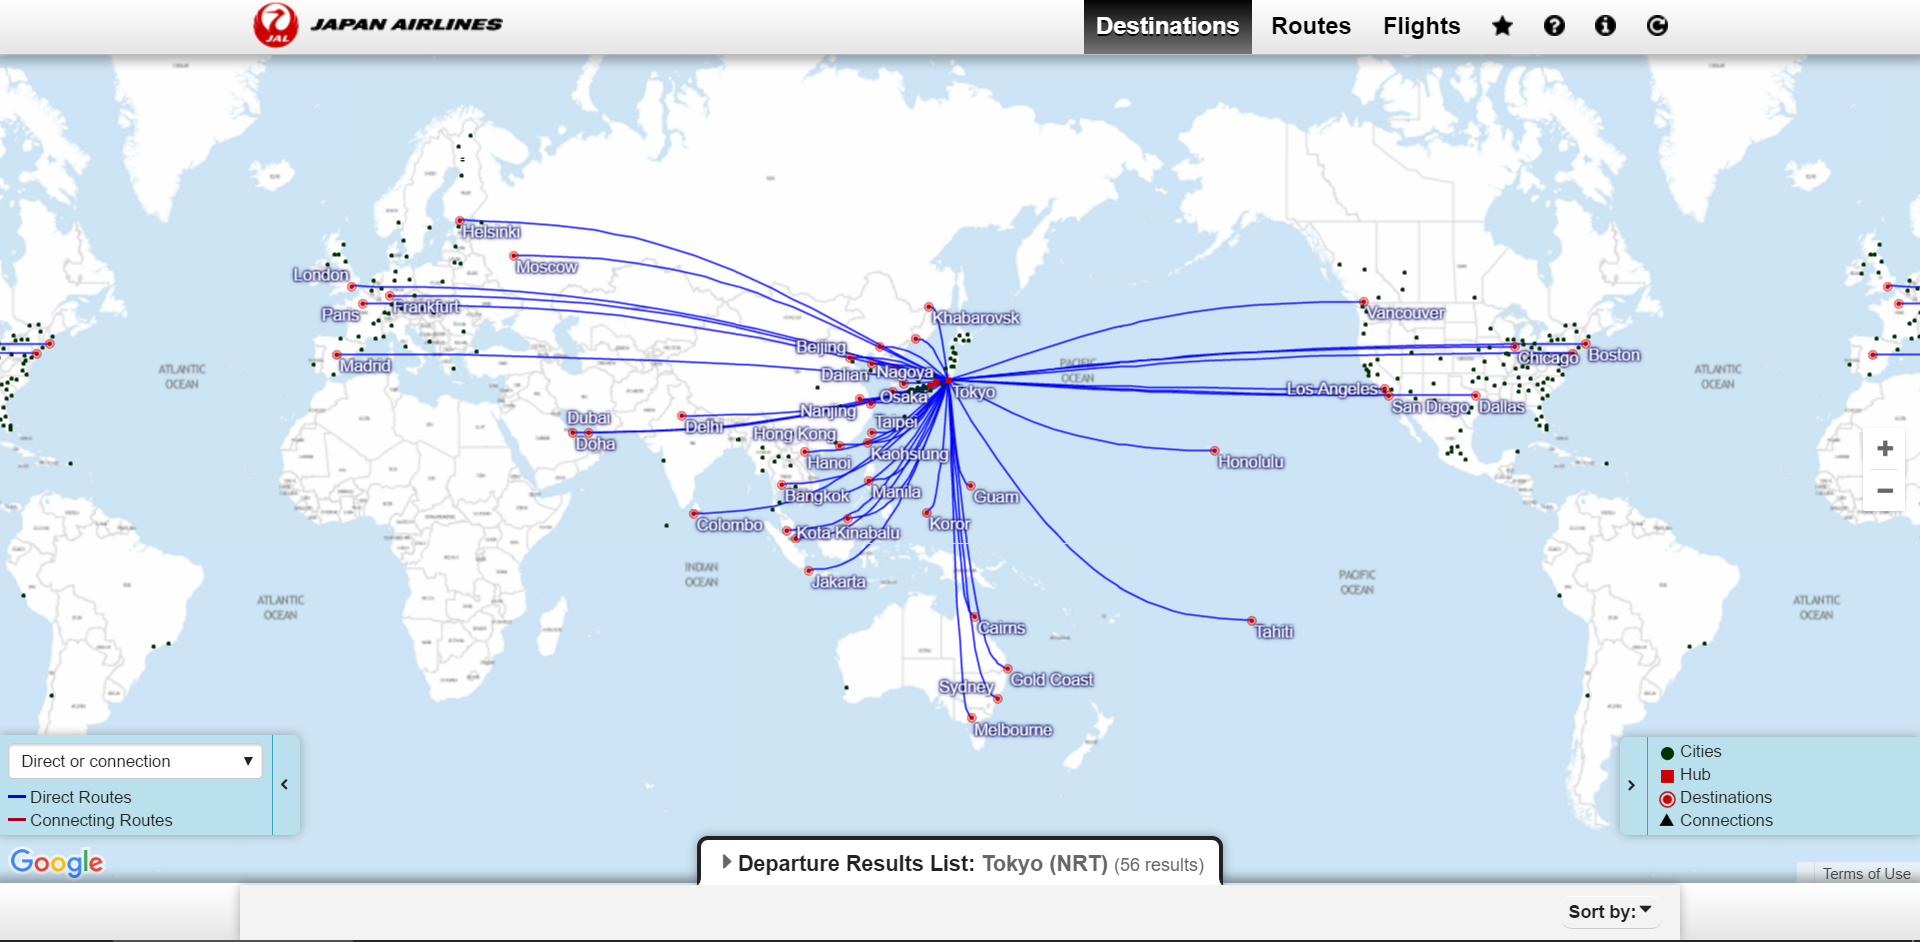 Japan Airlines карта полетов. Ryanair карта полетов. Карта полетов японских авиалиний. Карта полетов JAL.